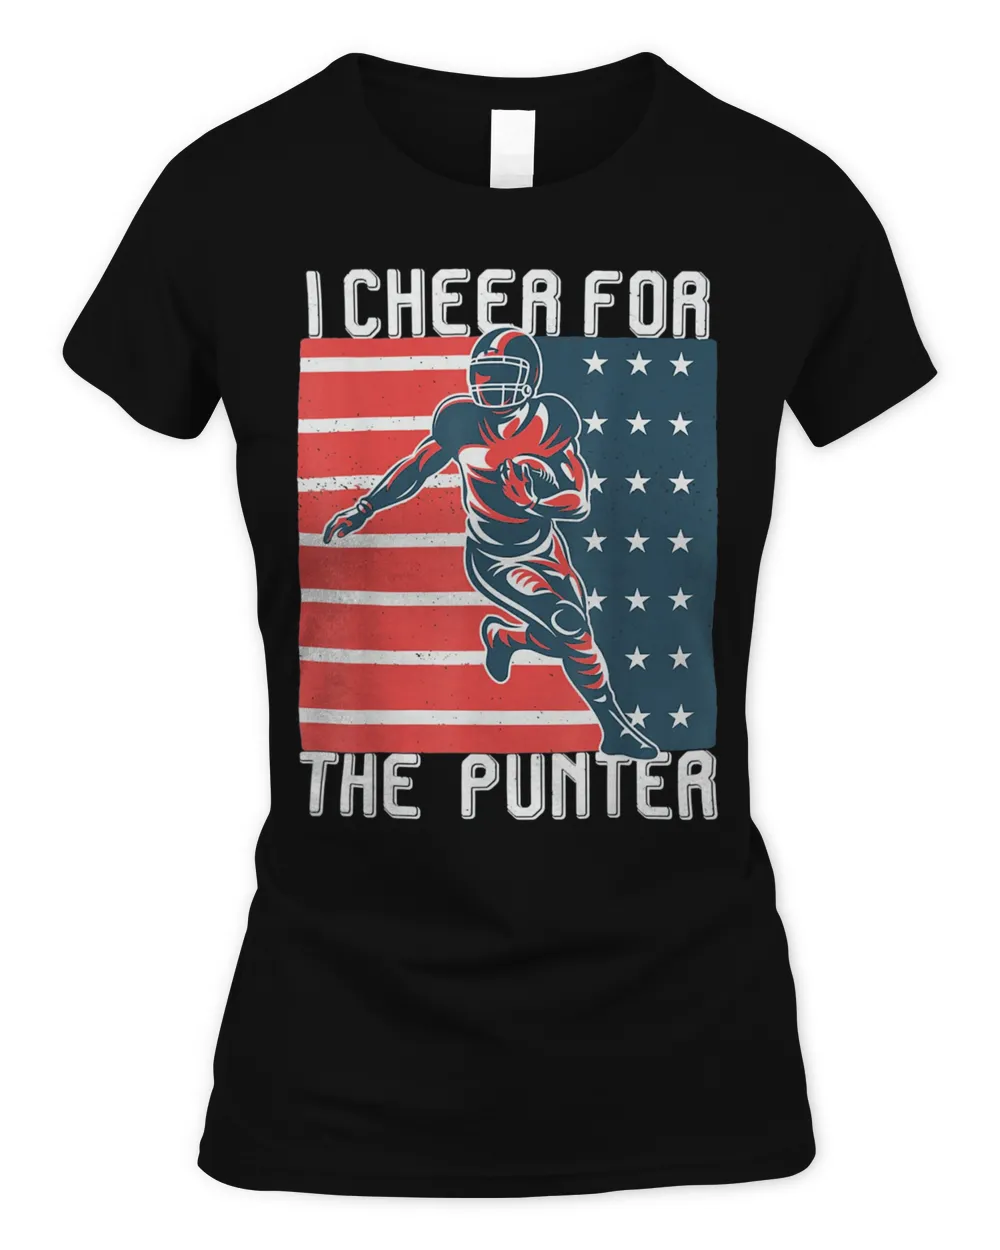 I cheer For The Punter Us Flag Shirt